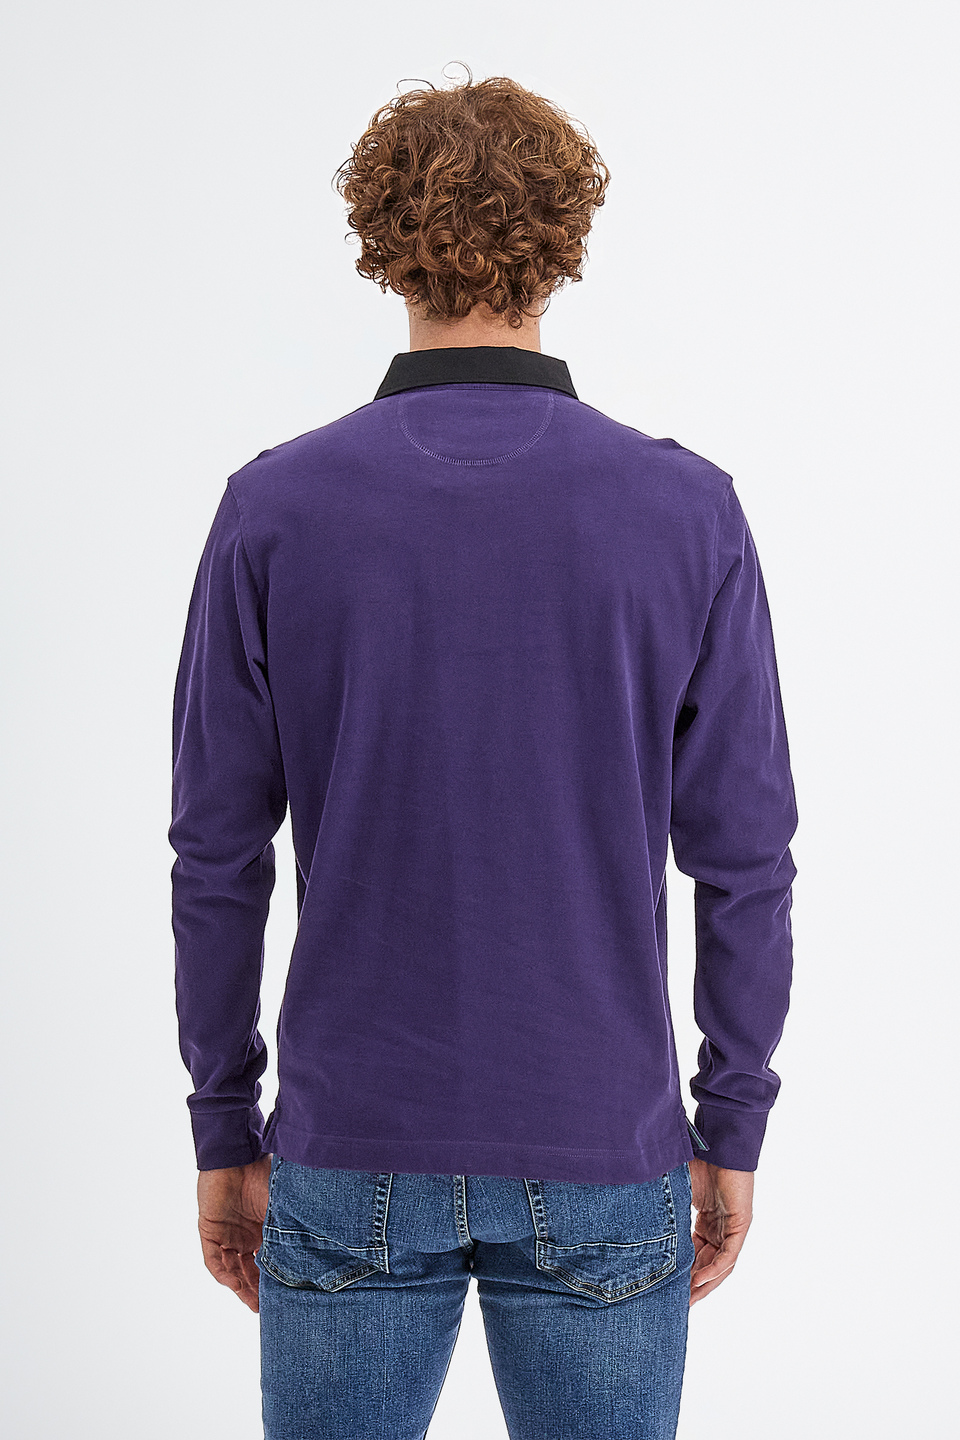 Langärmeliges Herren-Poloshirt aus klassisch geschnittenem Baumwolljersey | La Martina - Official Online Shop